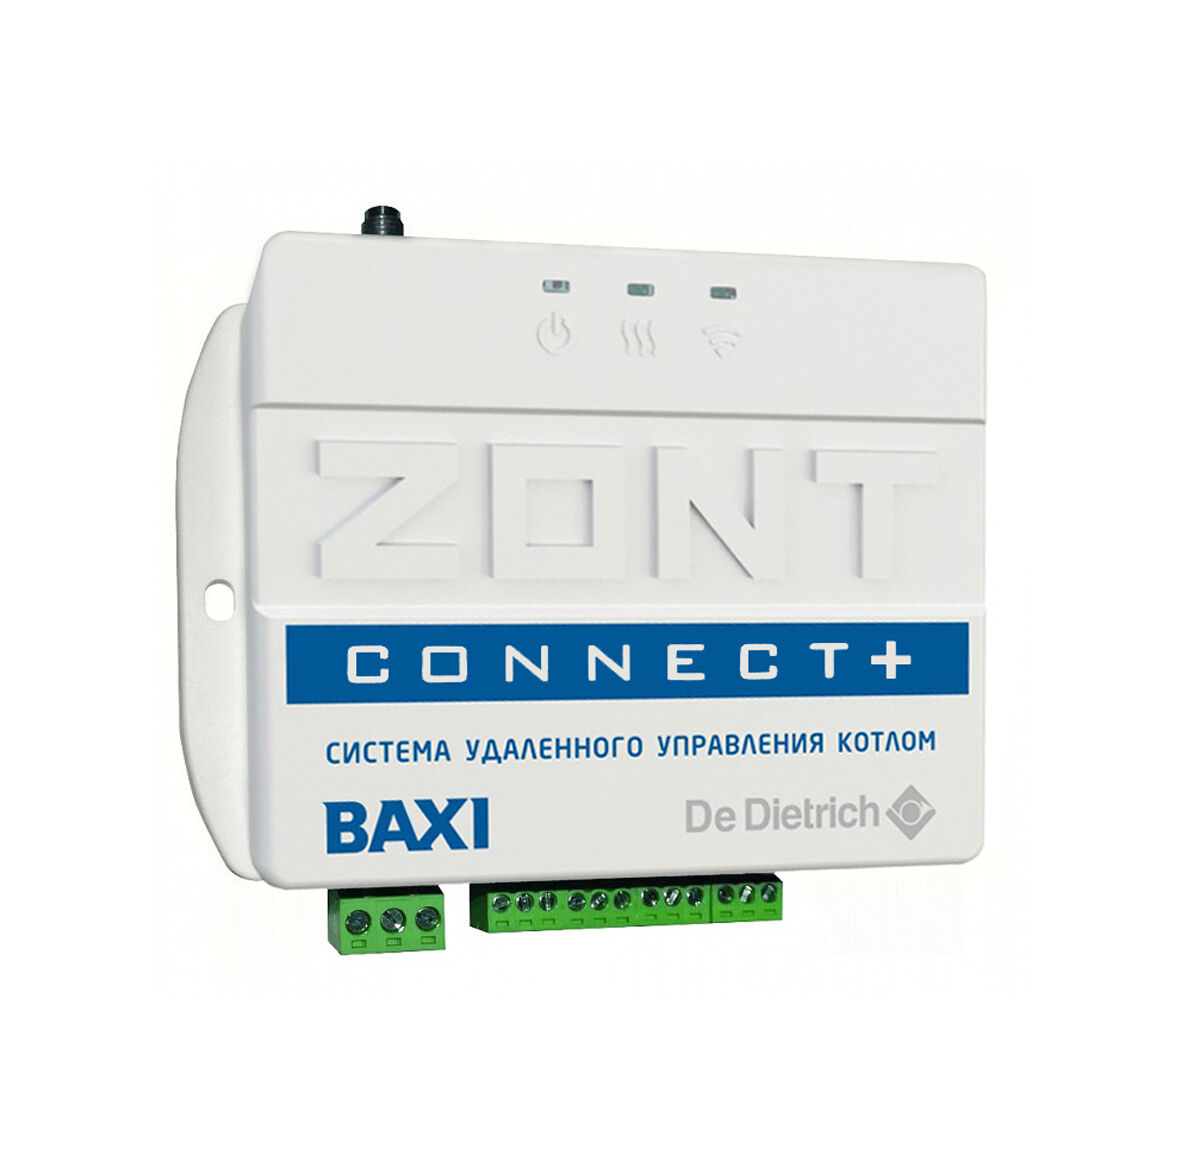 Zont connect Baxi. Термостат Zont Smart 2.0. GSM термостат Zont BT-2. Ml00003824 система удаленного управления котлом Zont connect.